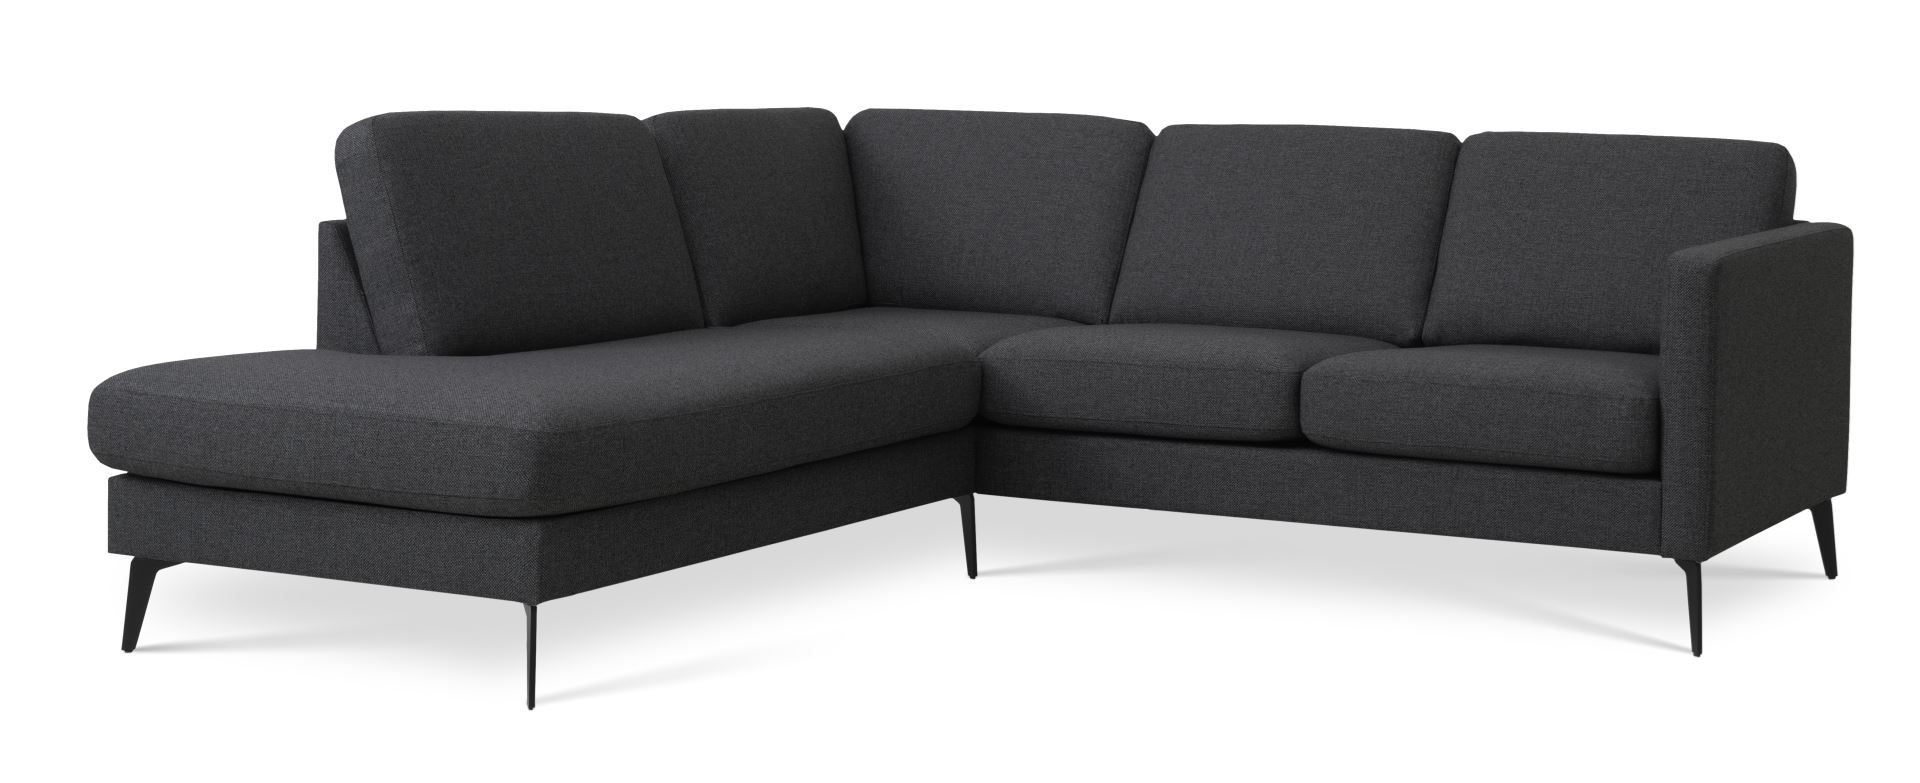 Ask sæt 52 lille OE sofa, m. venstre chaiselong - antracitgrå polyester stof og Eiffel ben